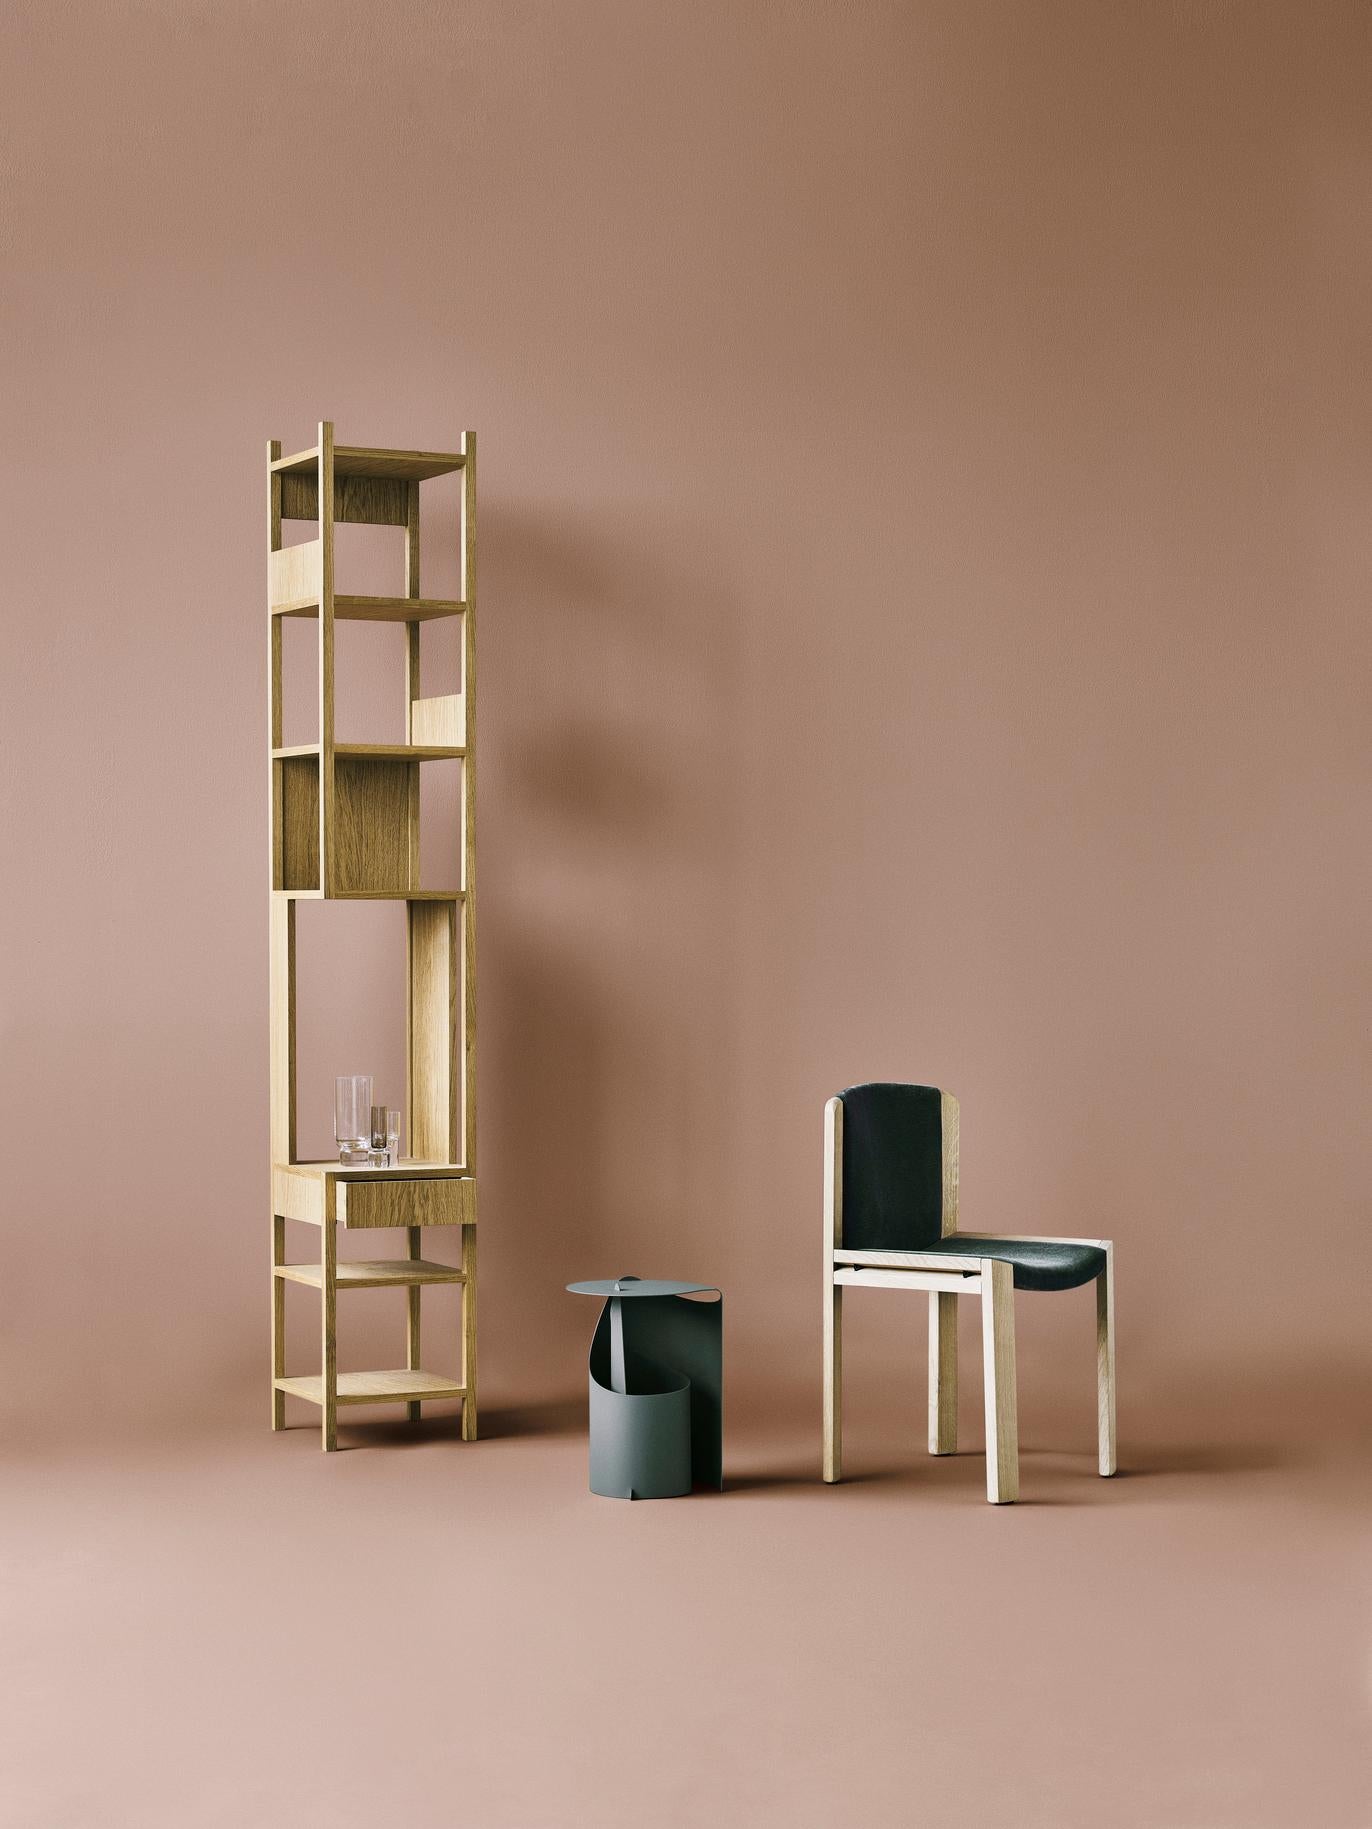 Joe Colombo 'Chair 300' Wood and Sørensen Leather by Karakter 7